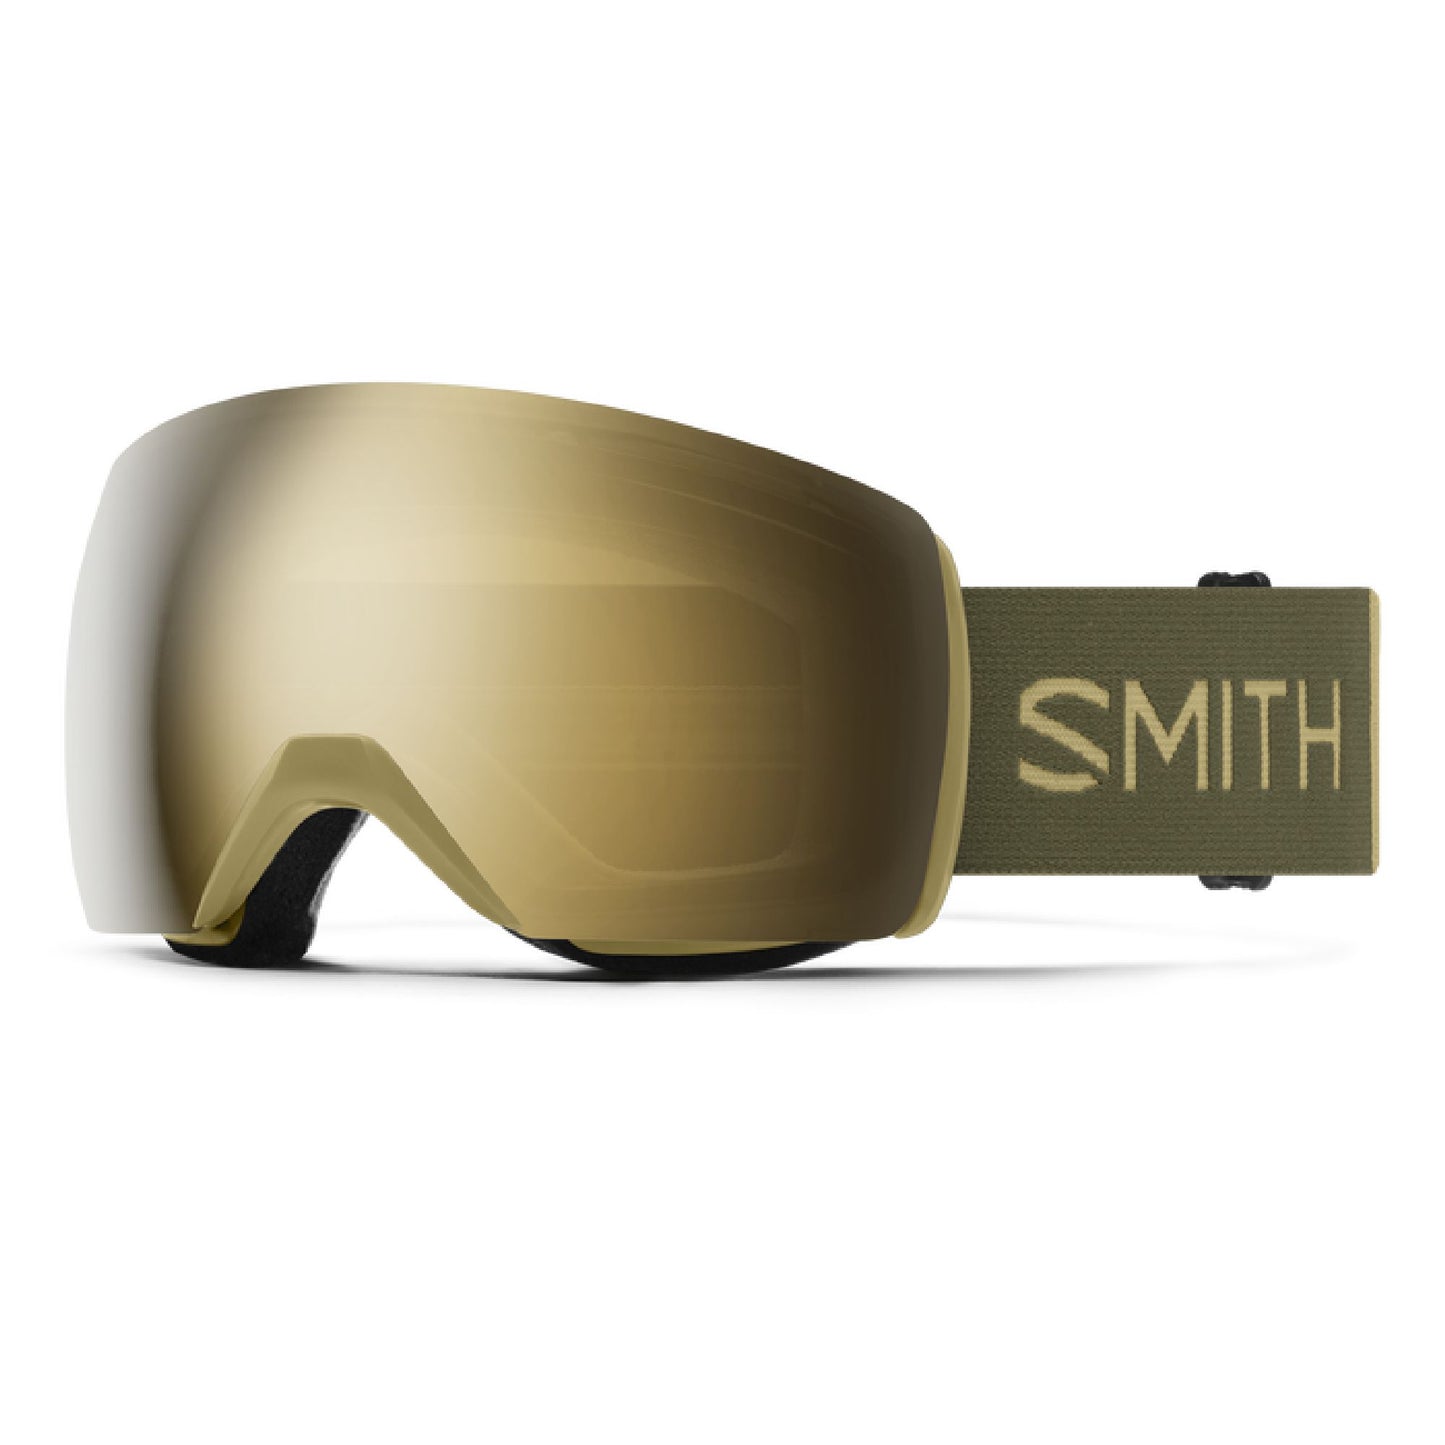 Smith Skyline XL Low Bridge Fit Snow Goggle Sandstorm Forest ChromaPop Sun Black Gold Mirror - Smith Snow Goggles